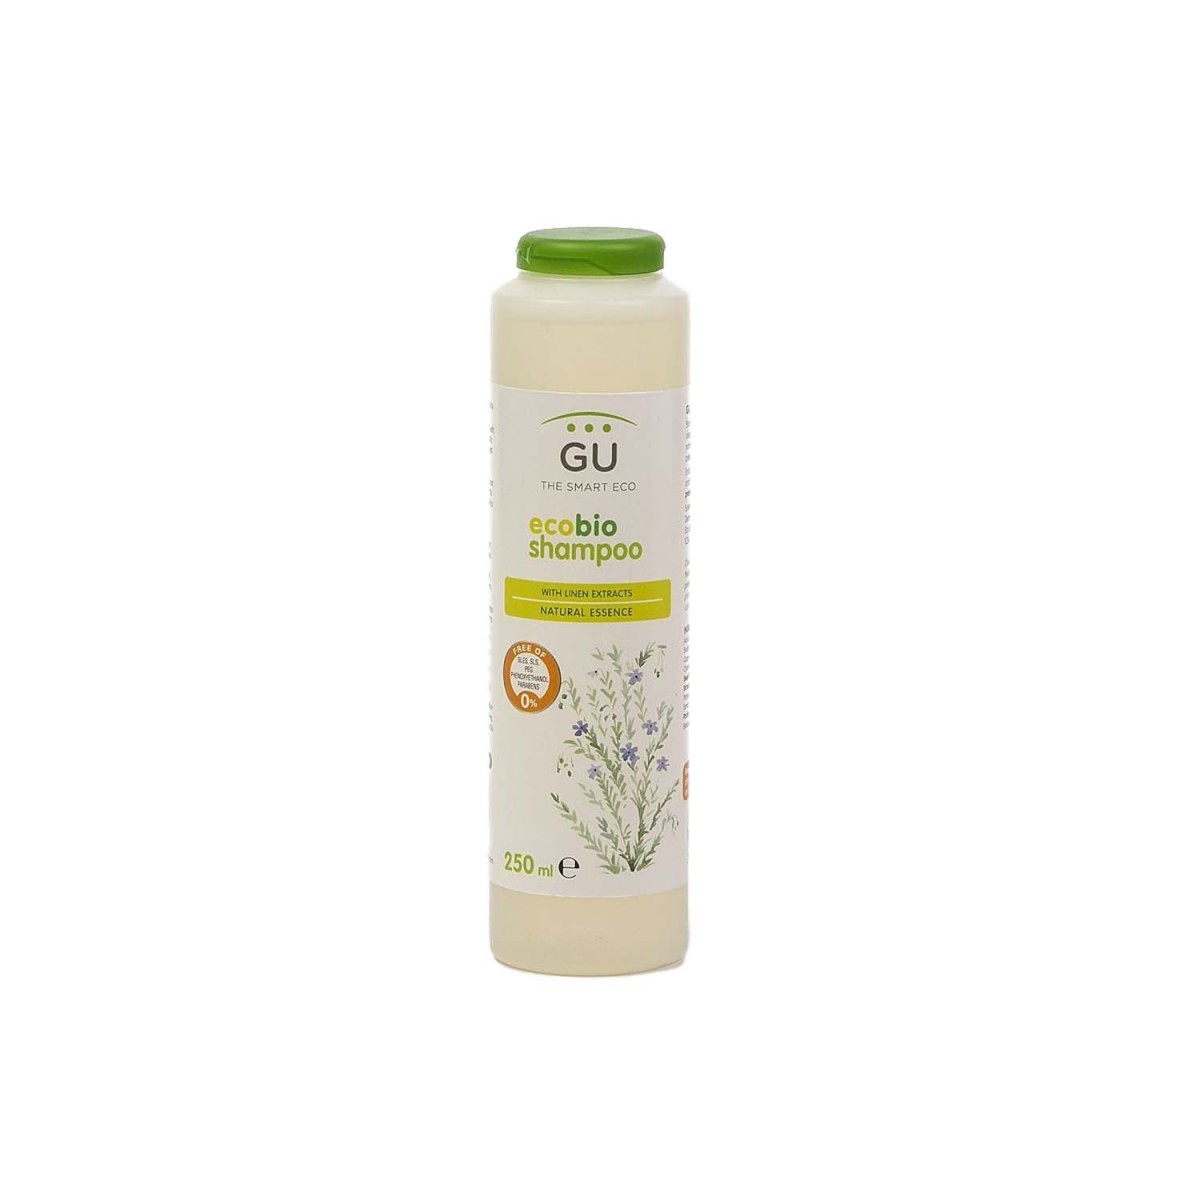 Organic shampoo. With flax extract